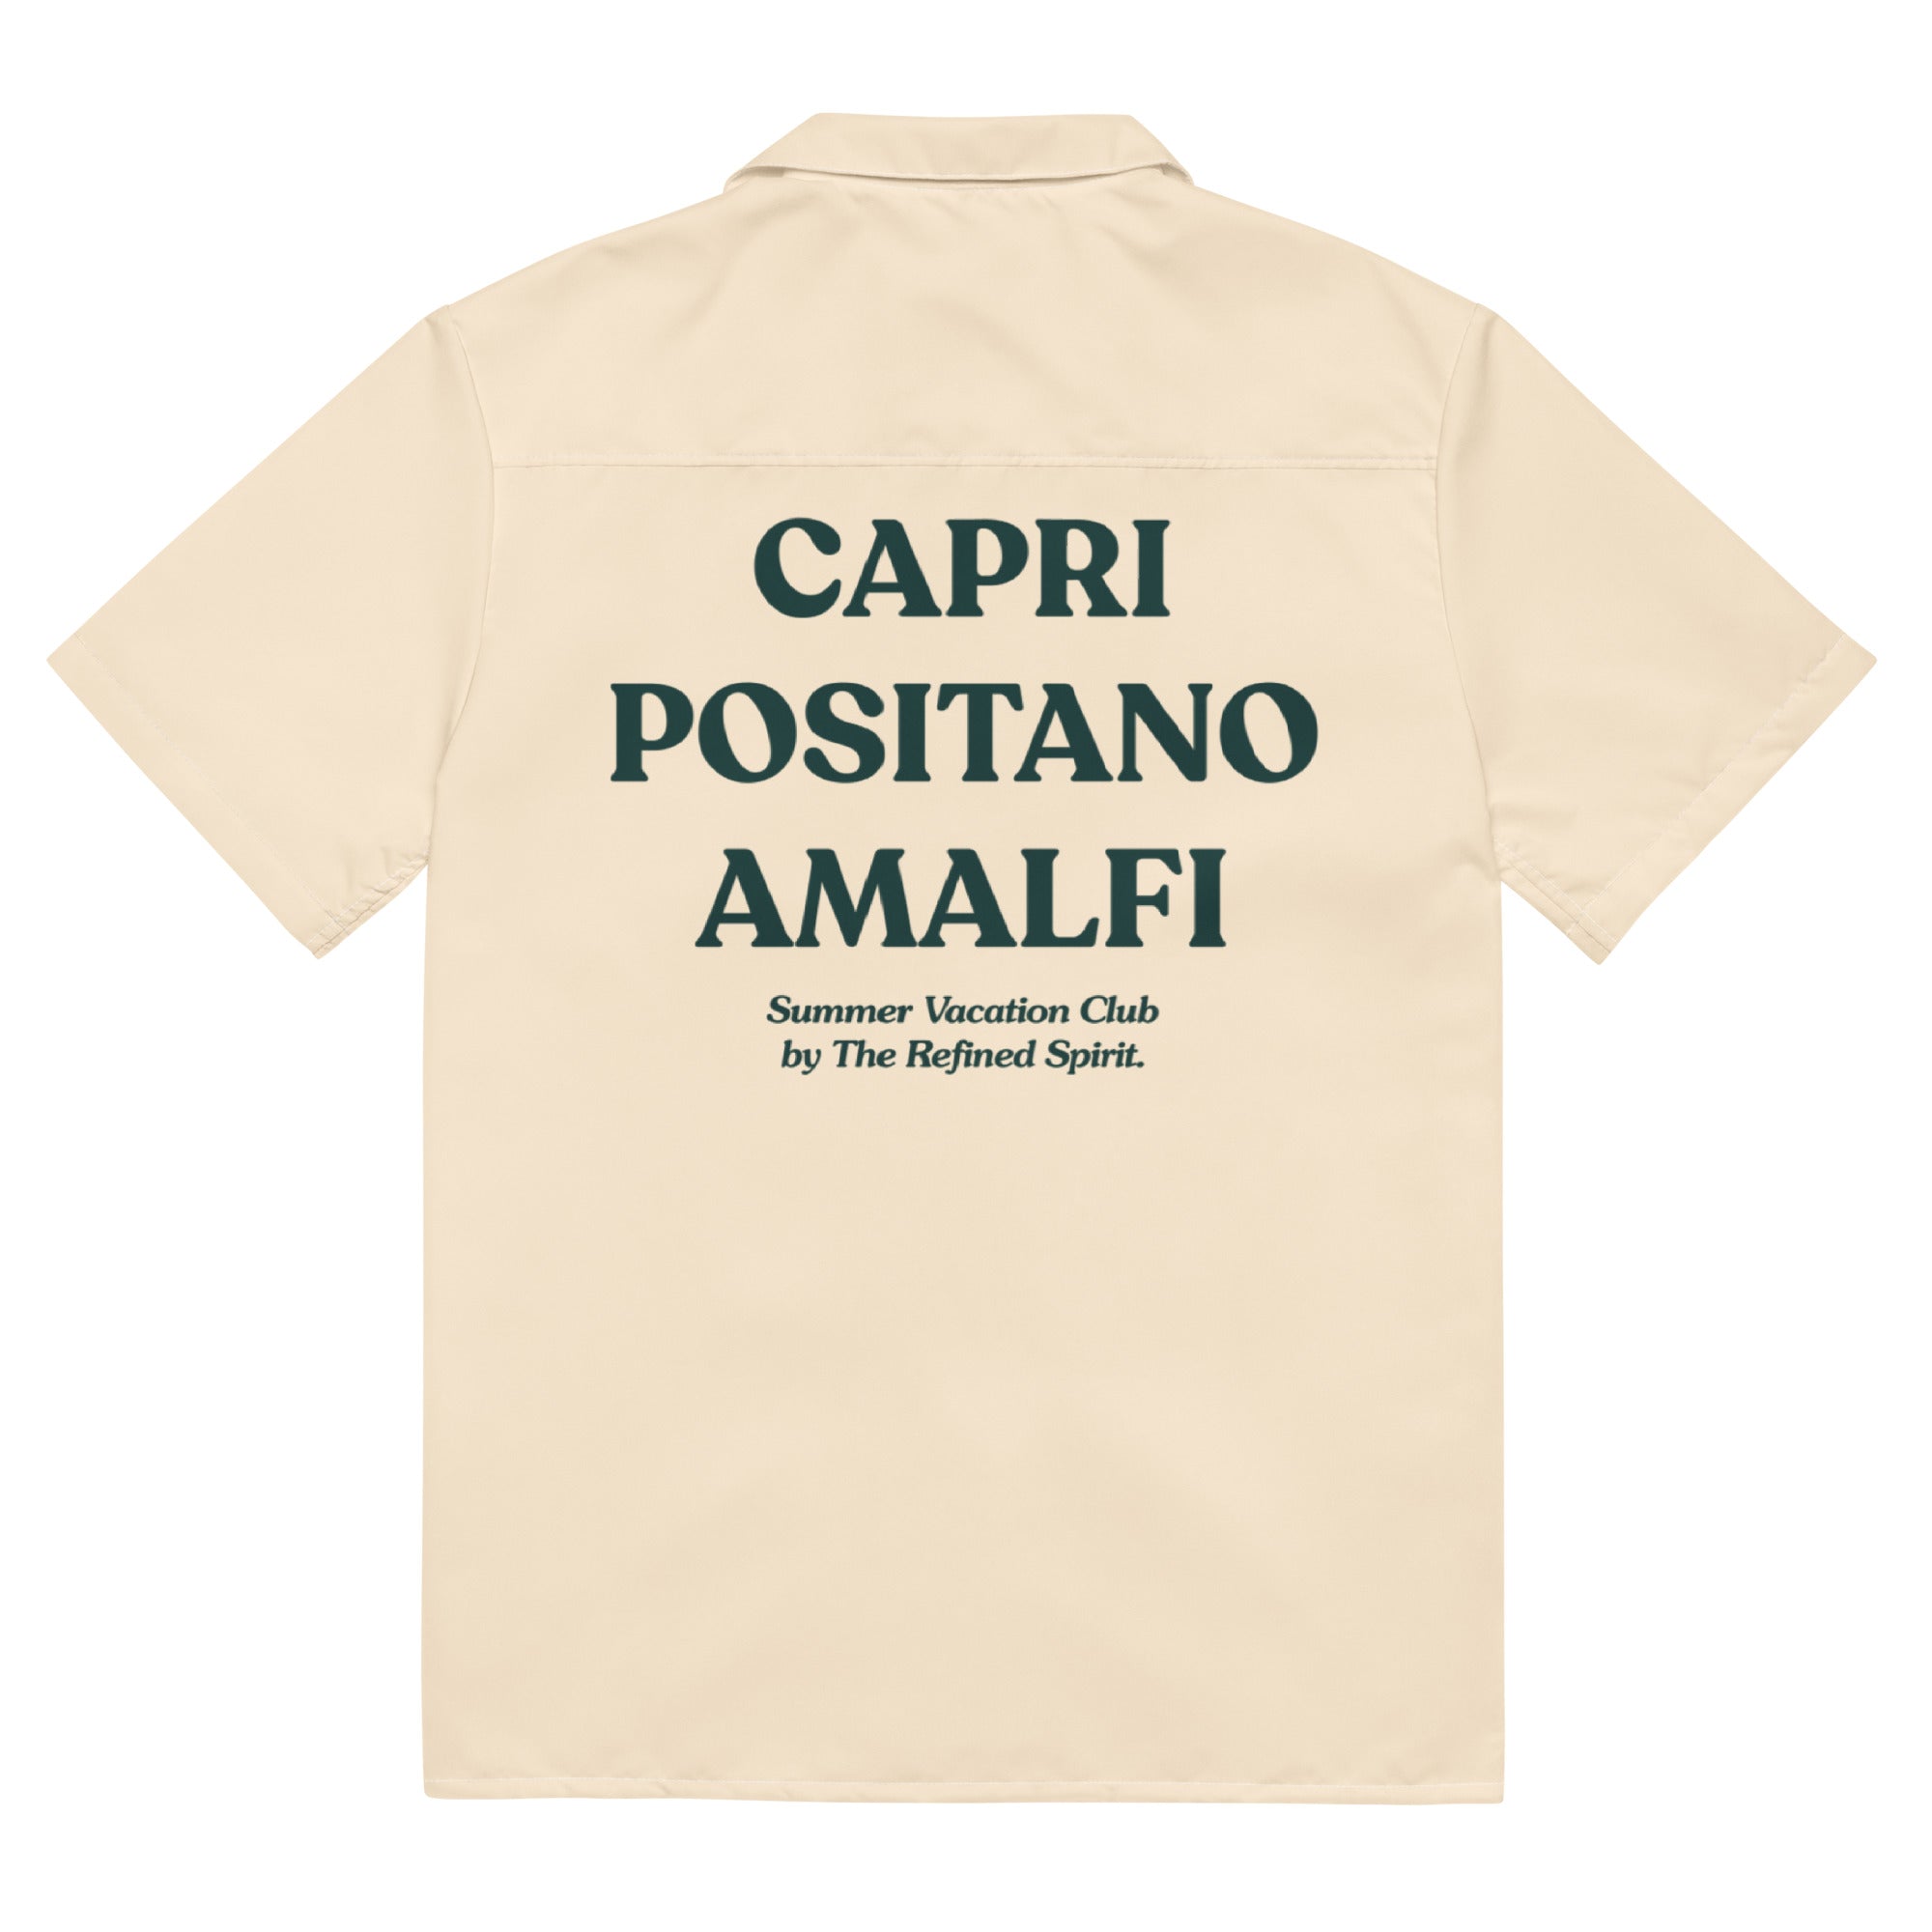 Capri Positano Amalfi - Pool Shirt